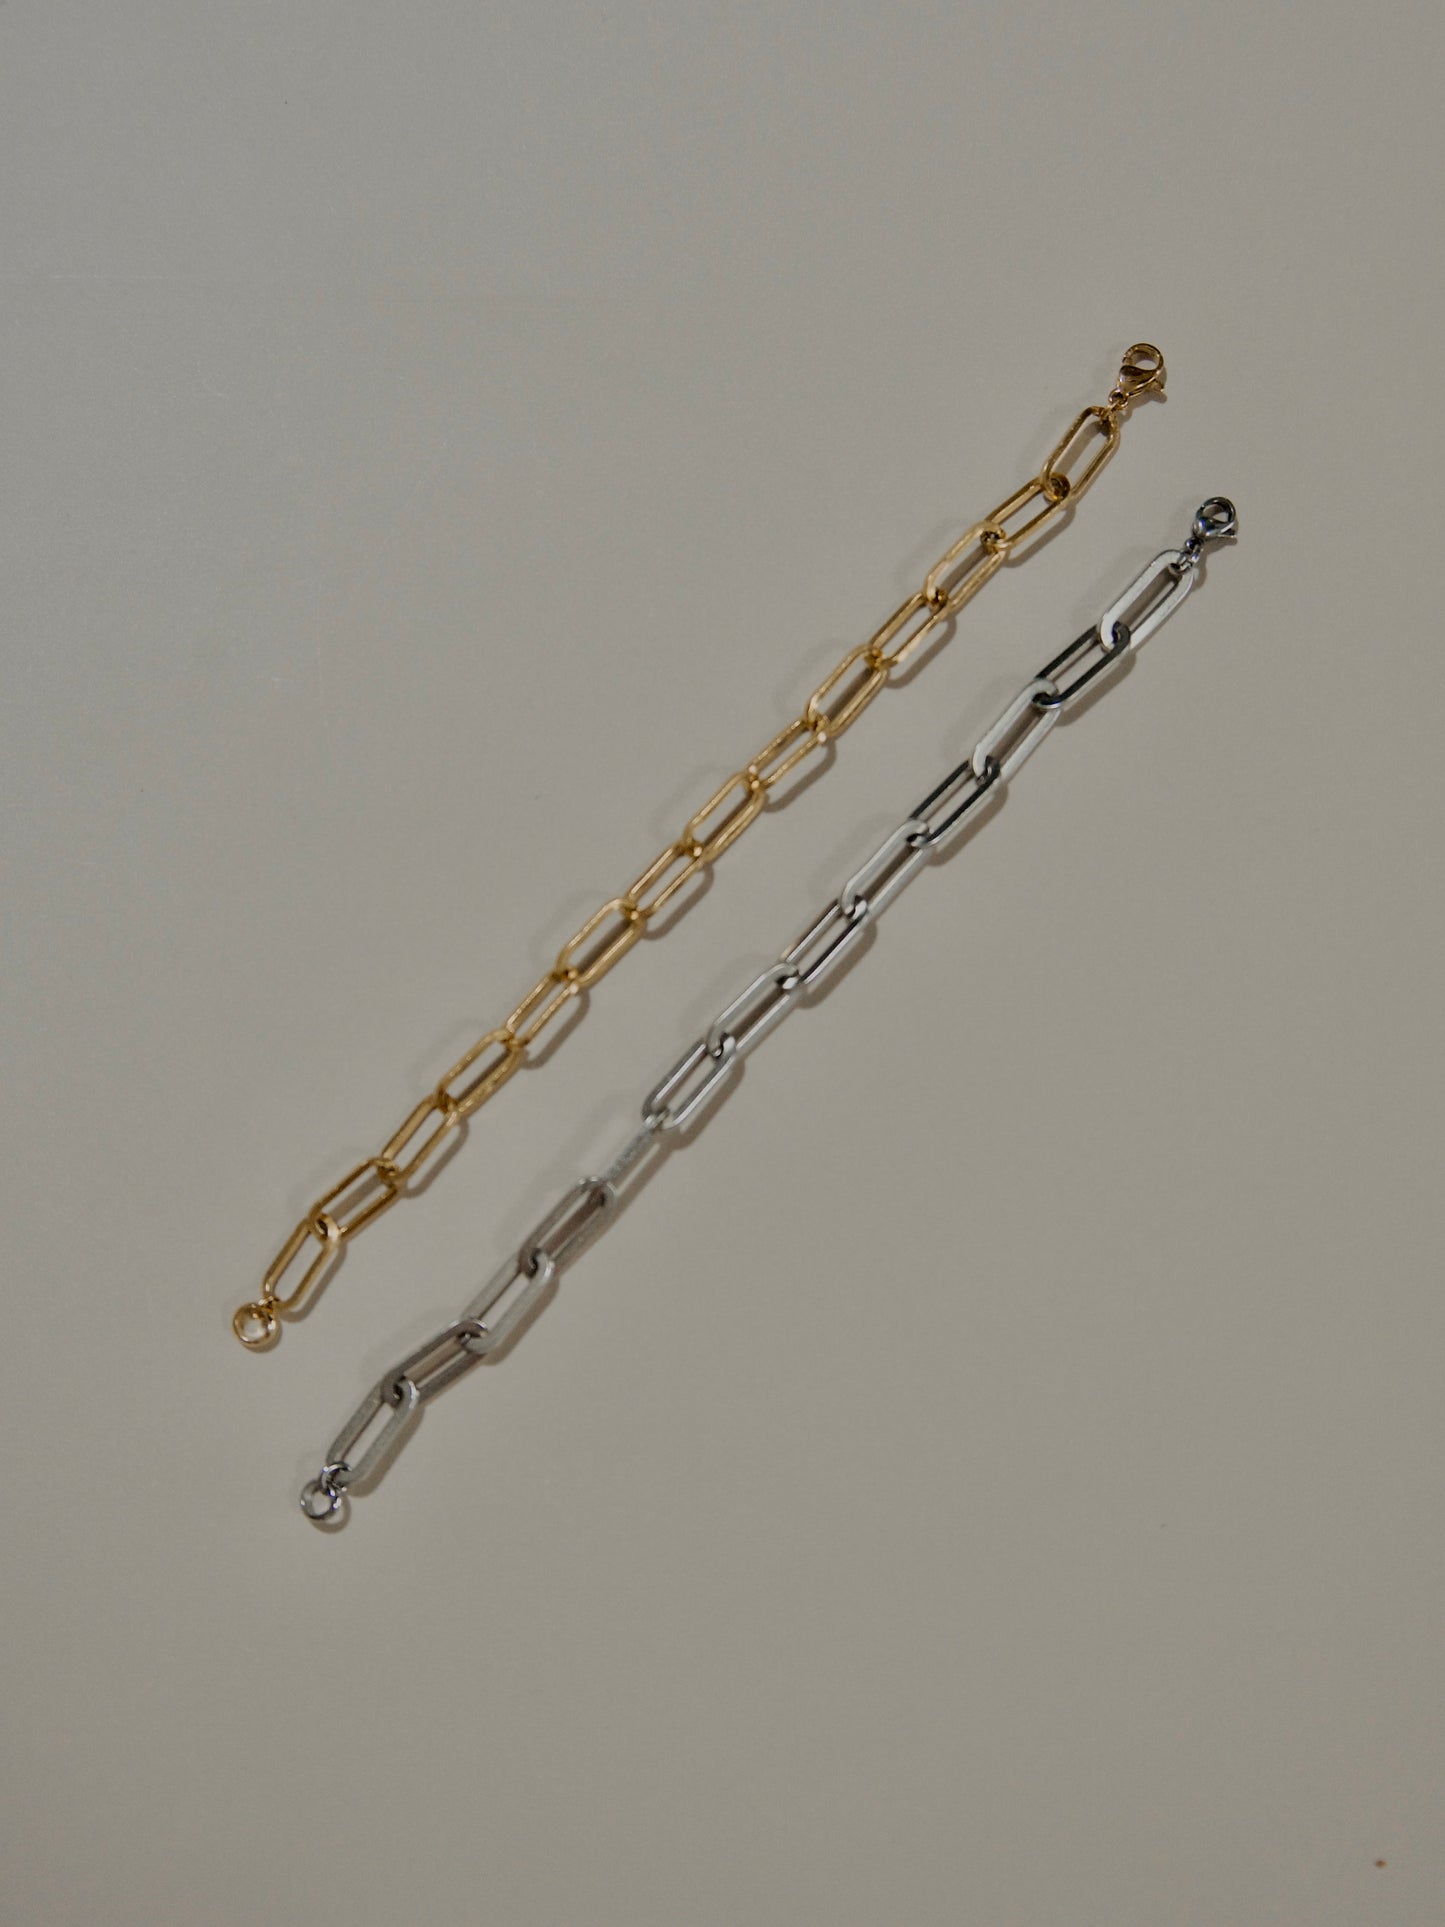 Basic Paperclip Chain Bracelet